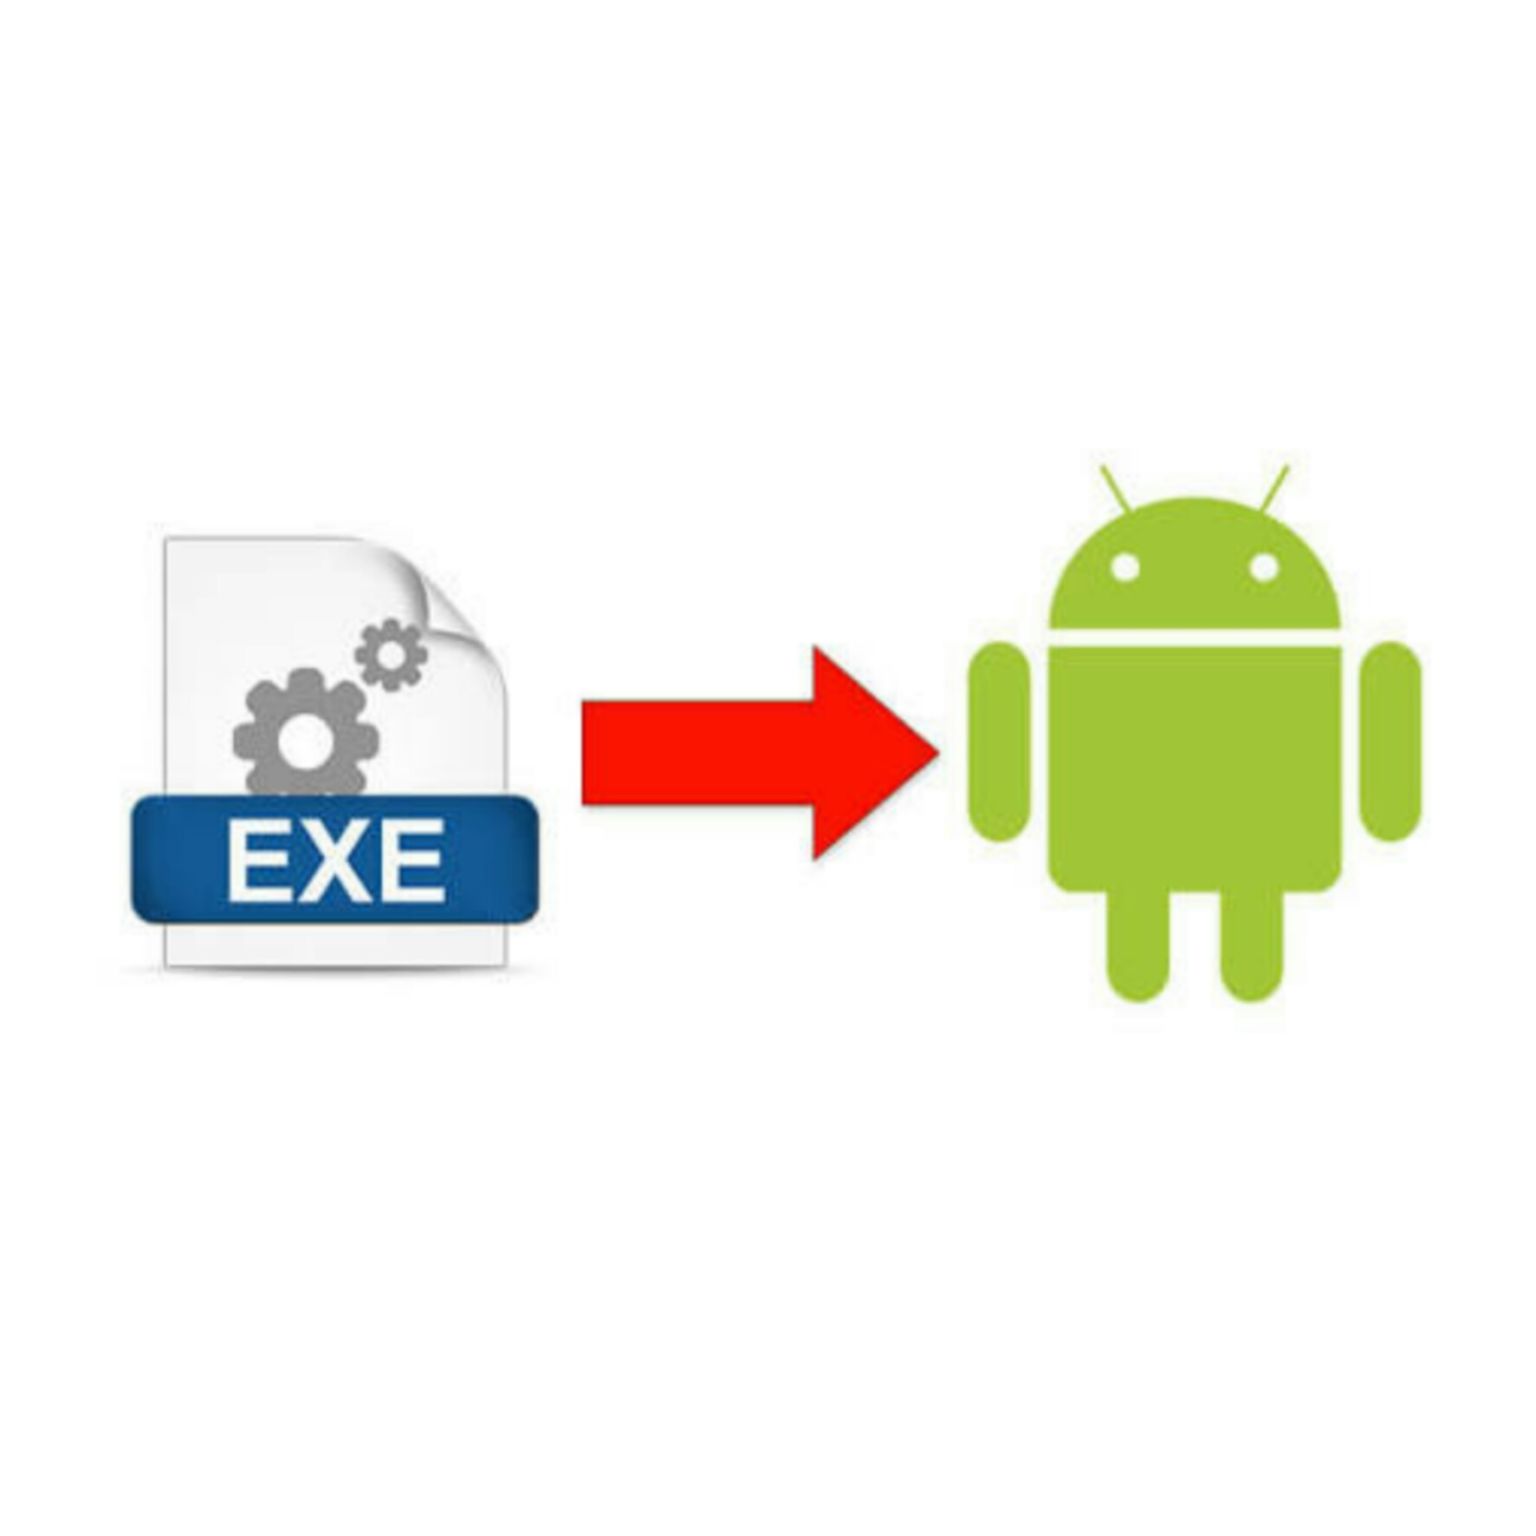 Реалити открыть андроид. Android.exe. Exe файл. Android файлы exe. Как открыть файл exe на андроид.